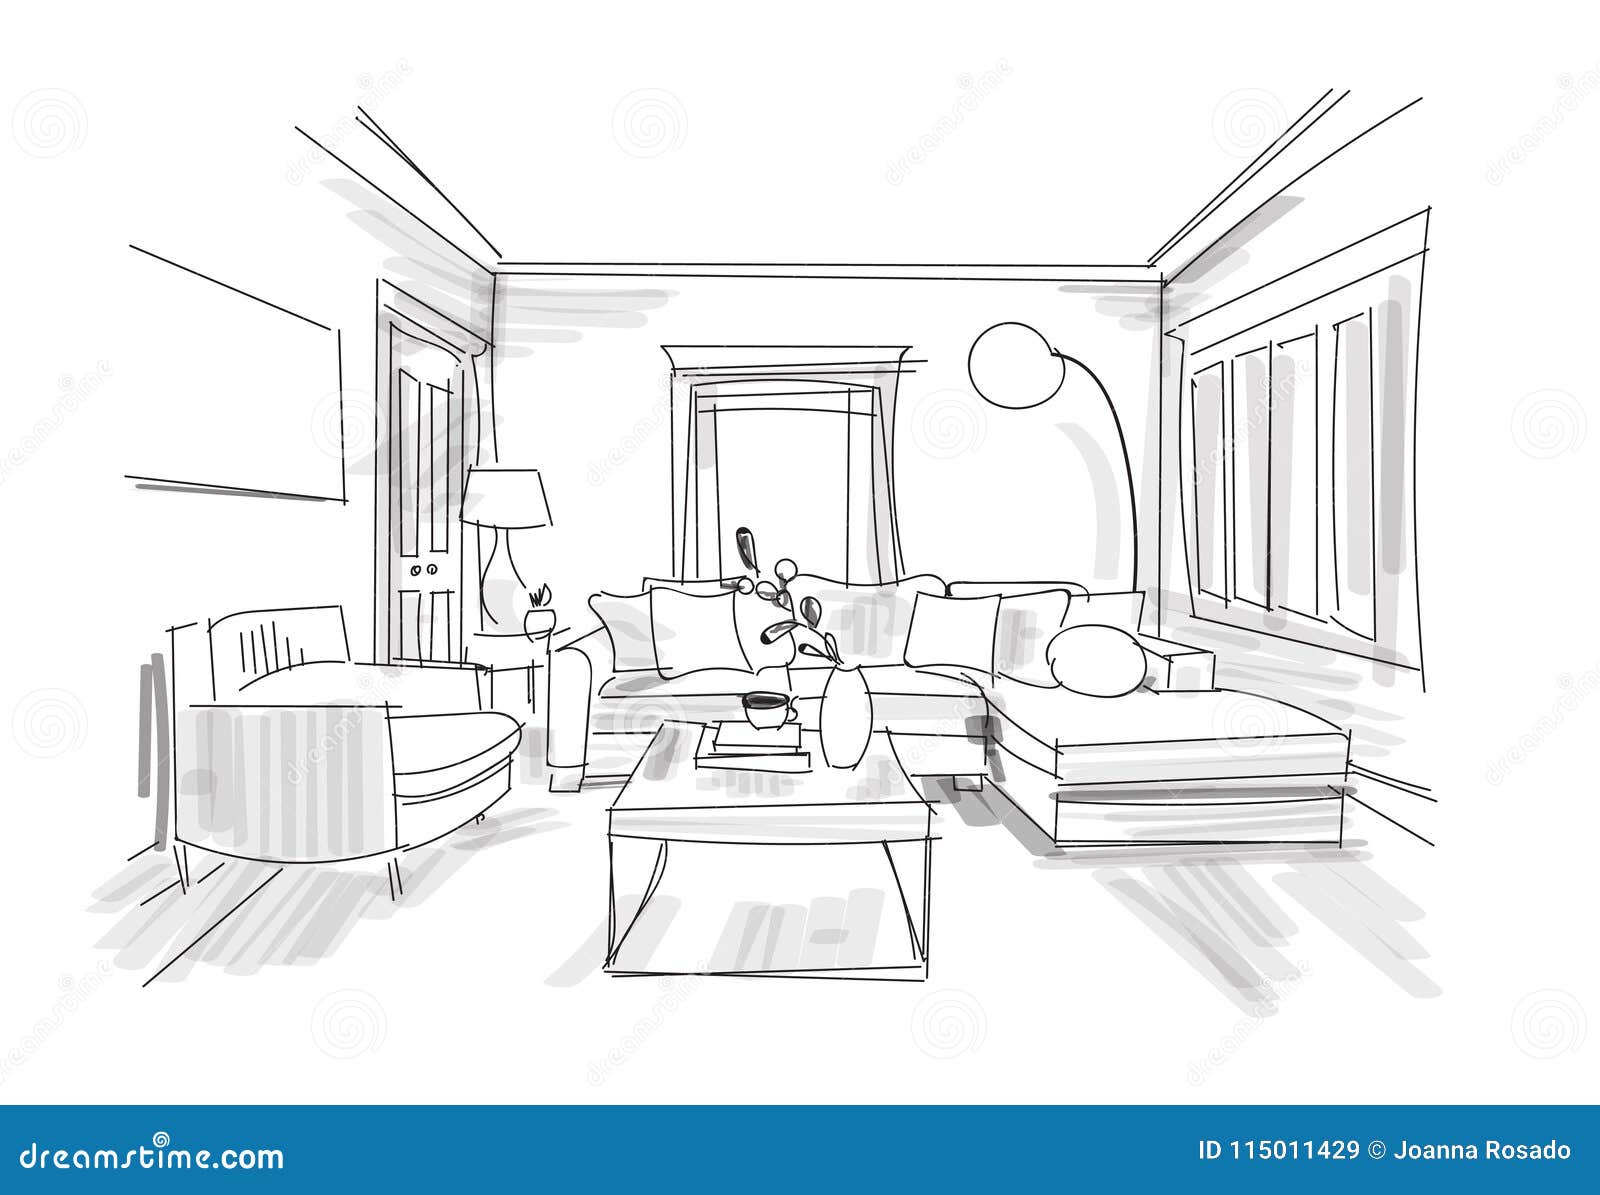 30+ Design Furniture Sketches Inspiration - The Architects Diary | Interior  design sketches, Interior design renderings, Interior architecture design